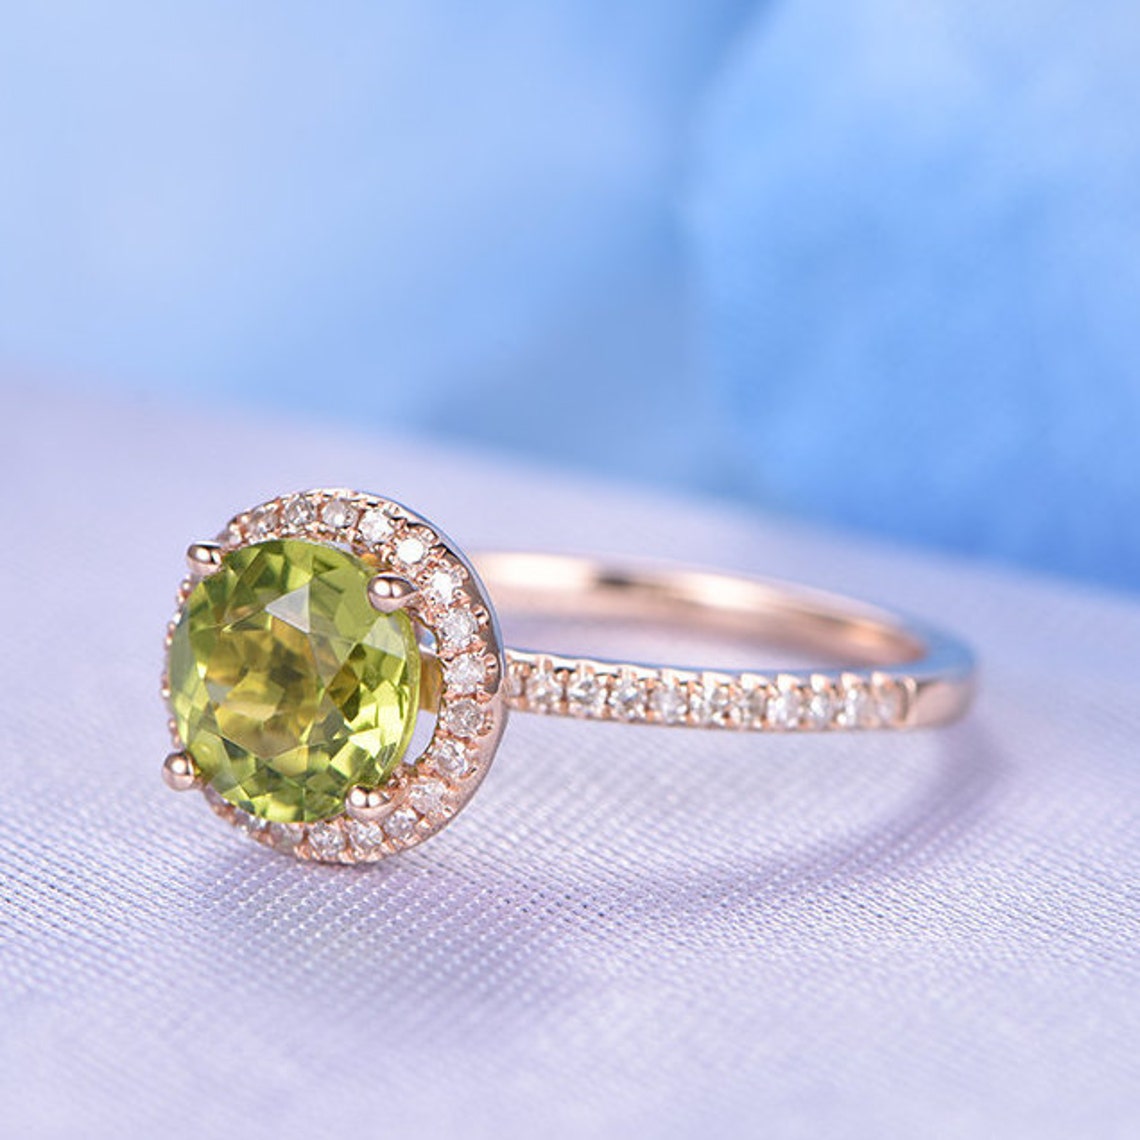 Peridot Engagement Ring 14k Rose Gold 7mm Round Cut Gem Stone | Etsy